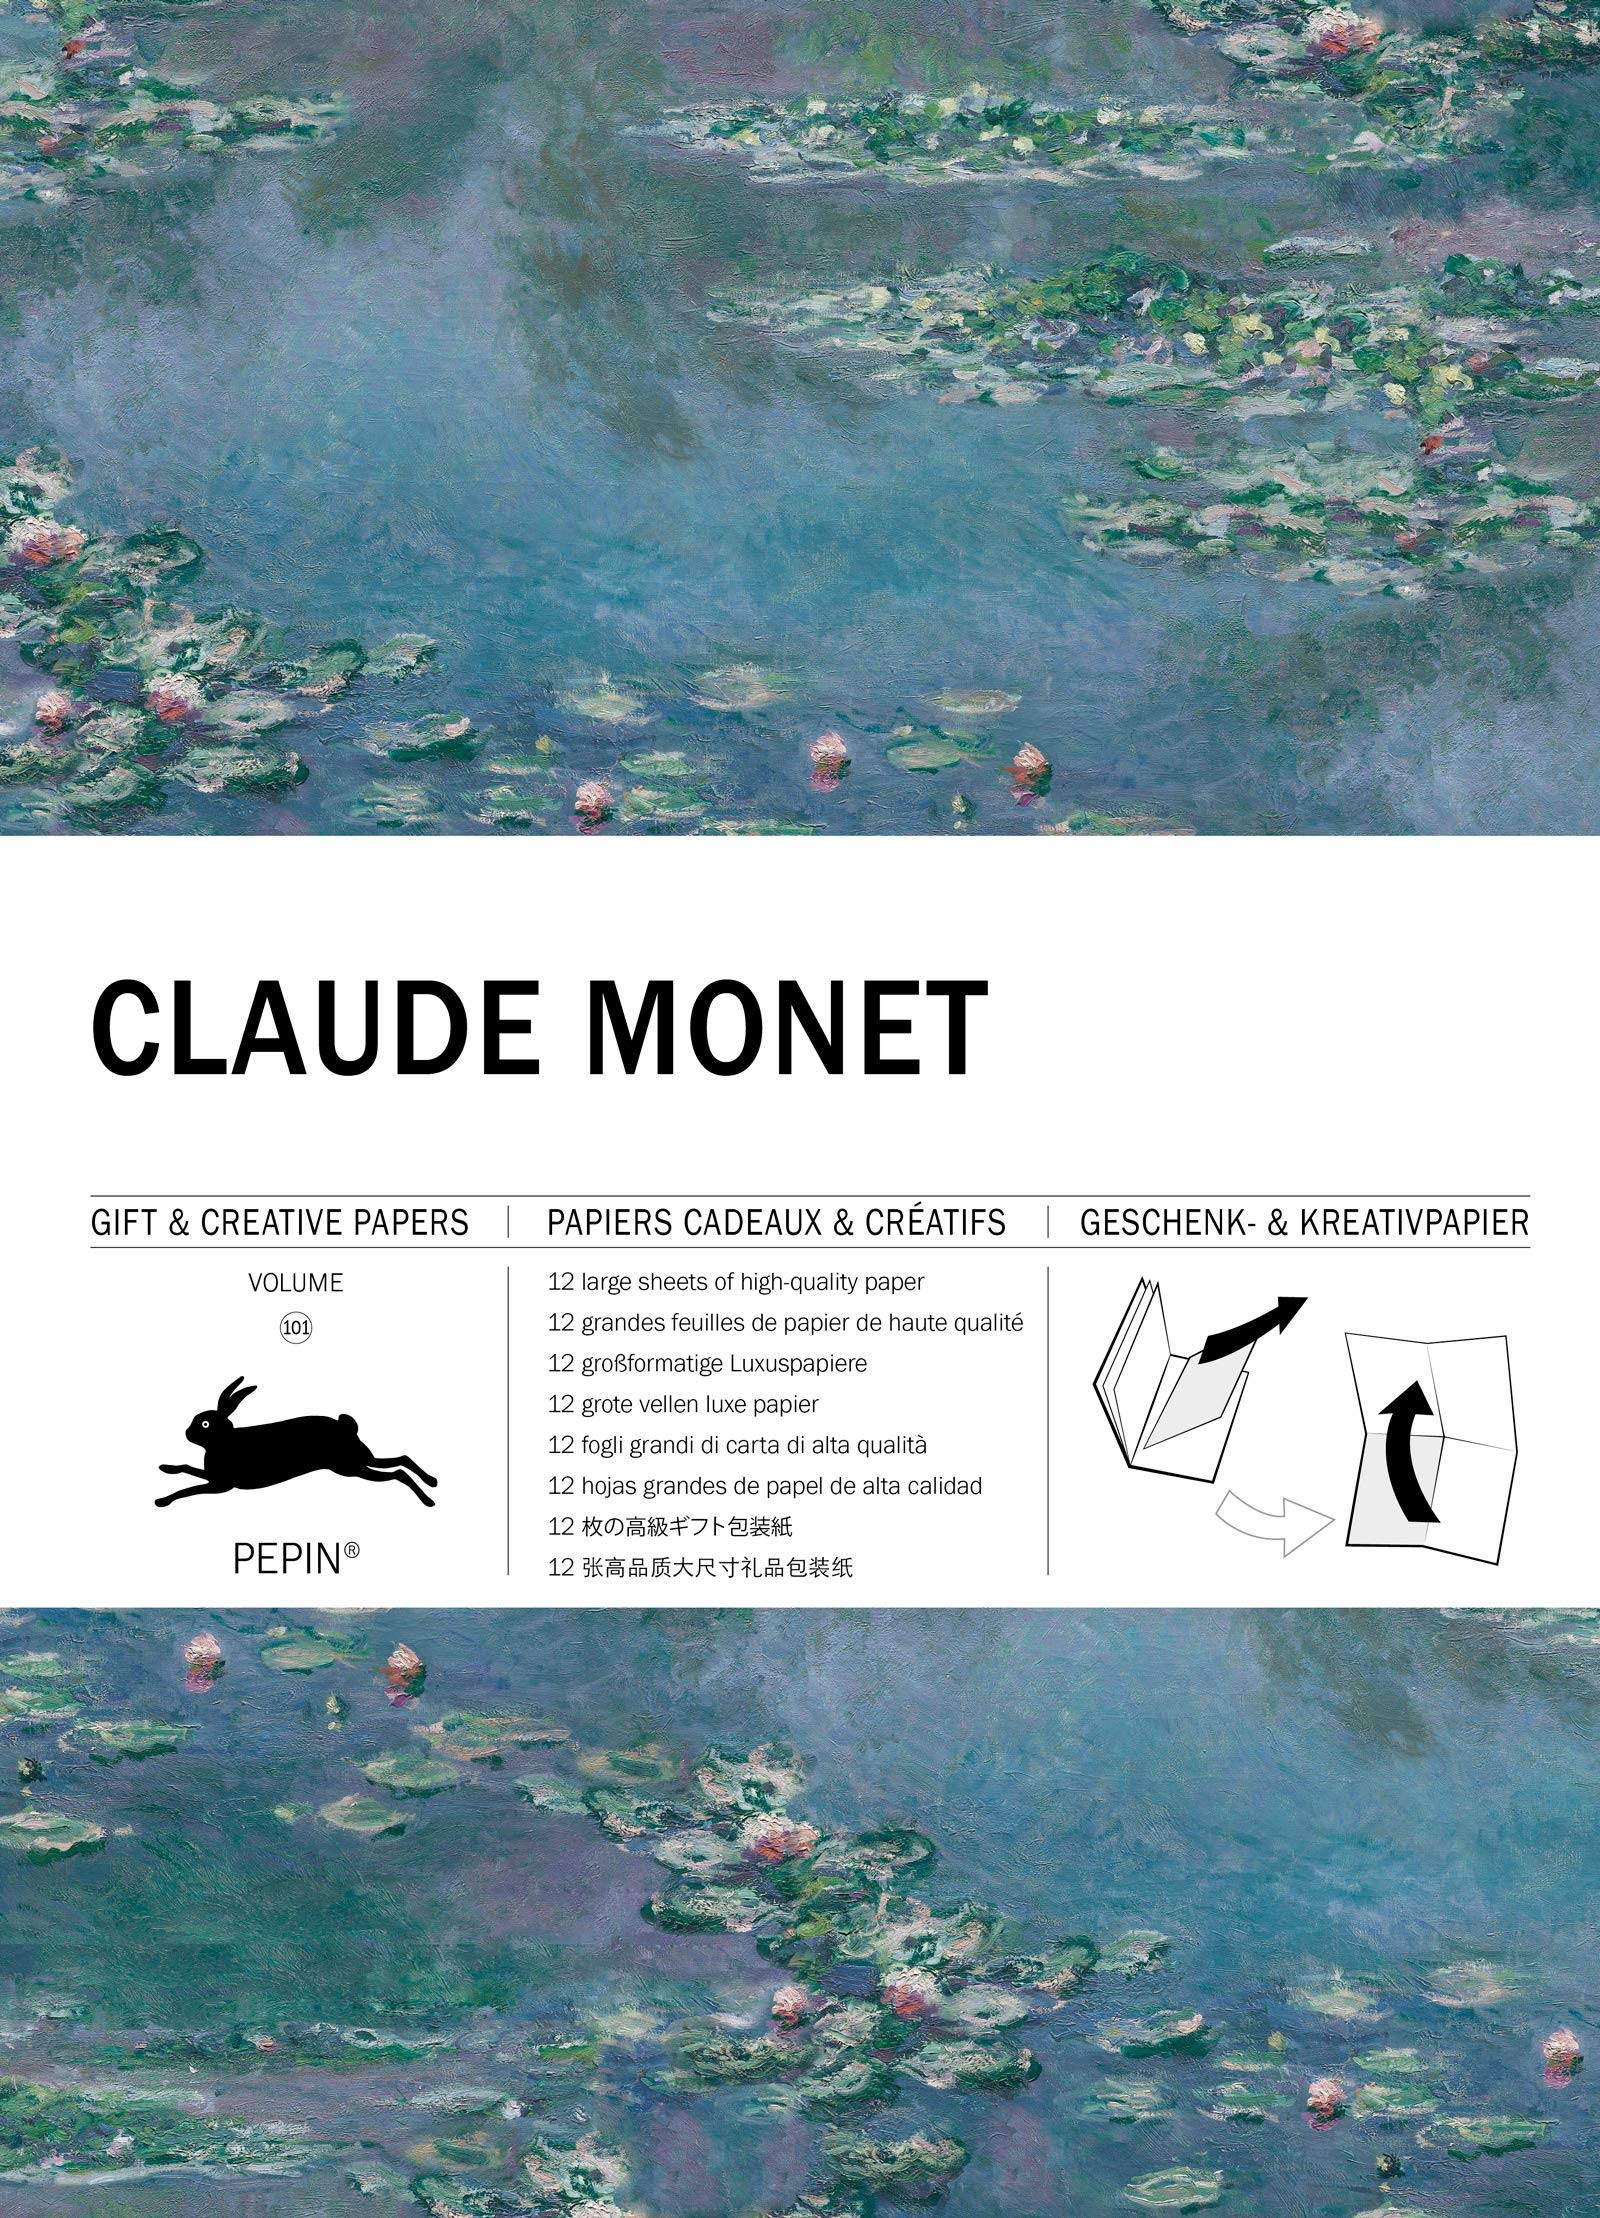 Pepin Press - Gift & Creative Papers: Claude Monet